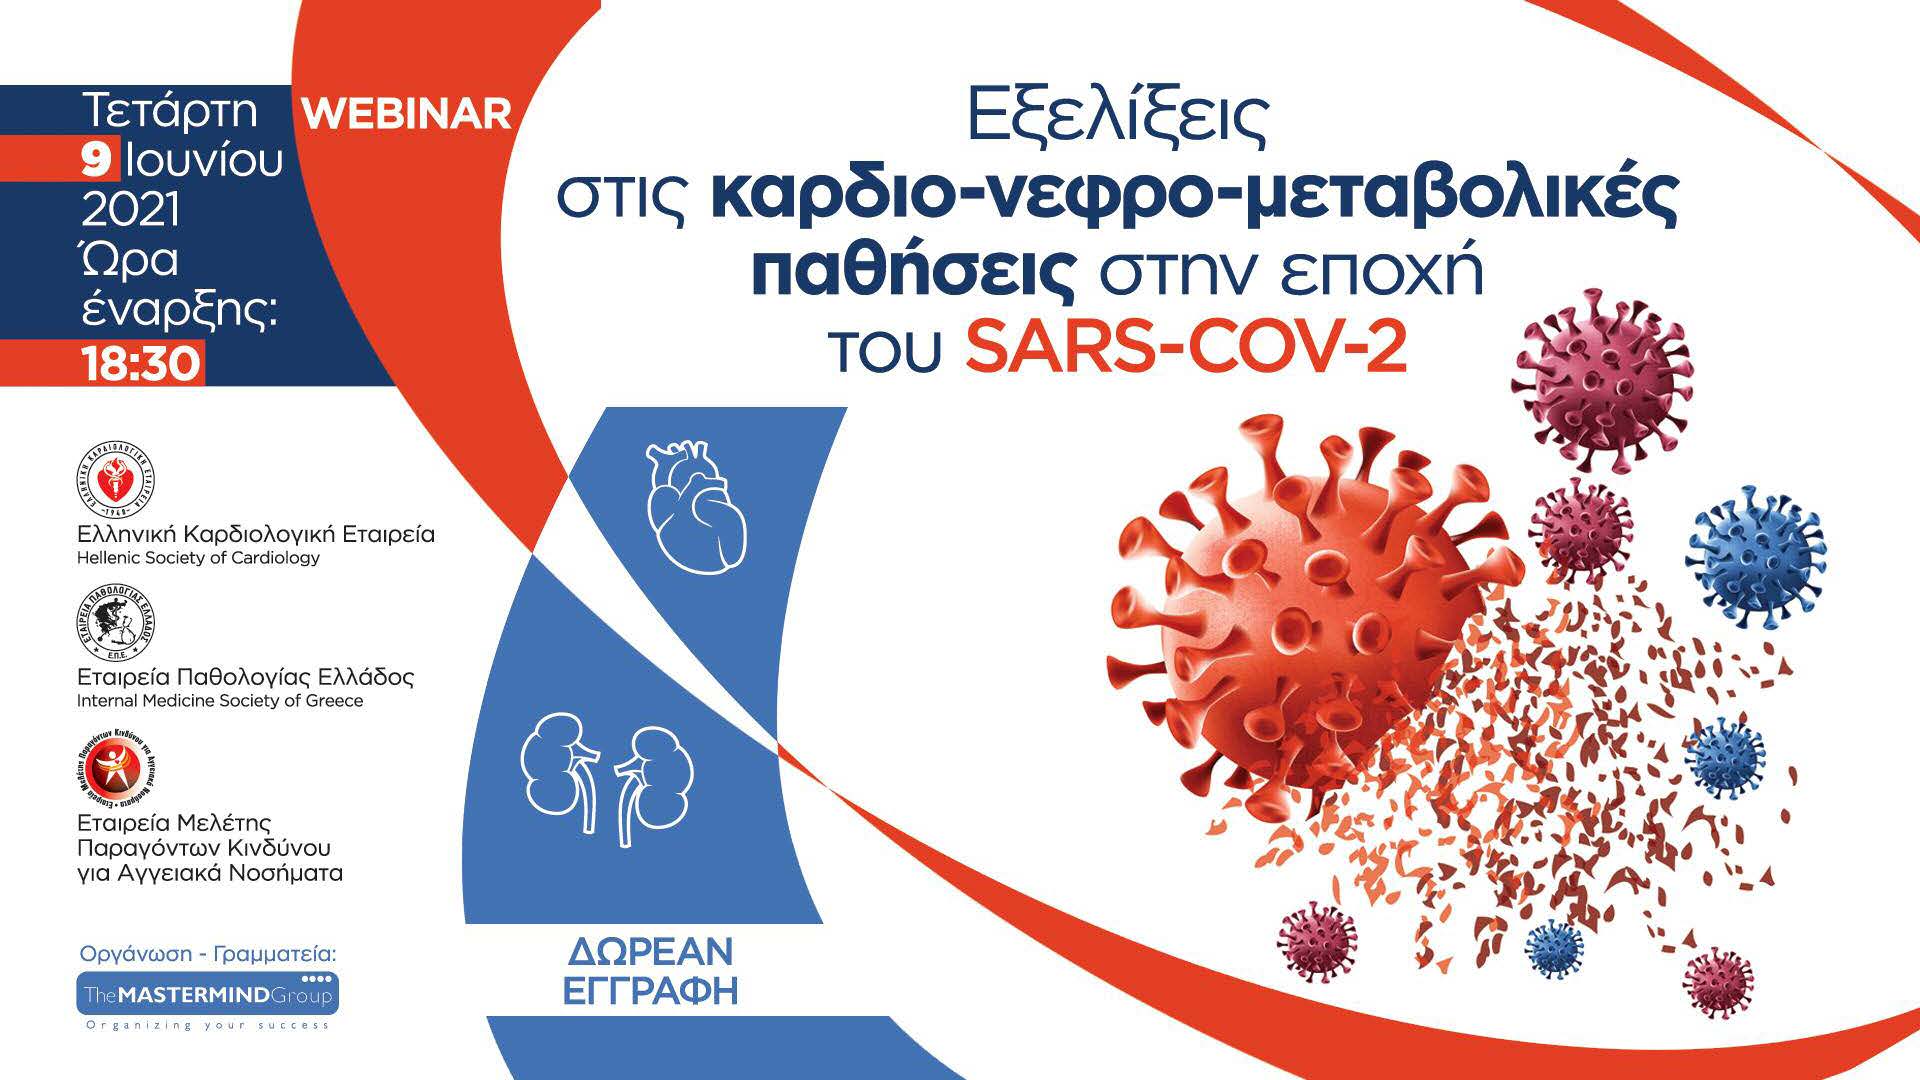 Webinar: "Εξελίξεις στις Καρδιο-Νεφρο-Μεταβολικές Παθήσεις στην Εποχή του Sars-Cov-2" - (Τετάρτη 9 Ιουνίου 2021, 18:30)